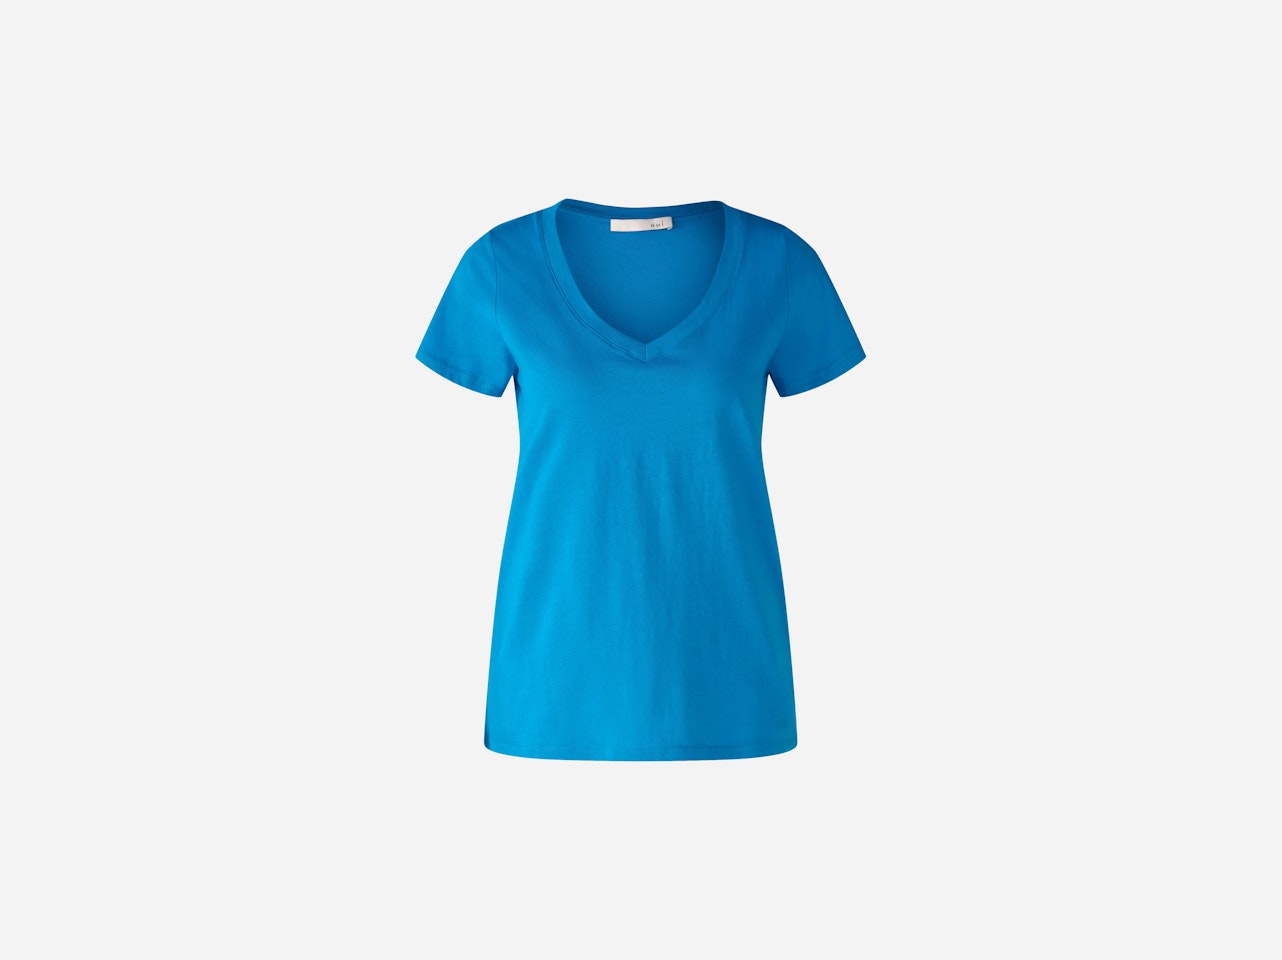 Bild 5 von CARLI T-shirt 100% organic cotton in blue jewel | Oui